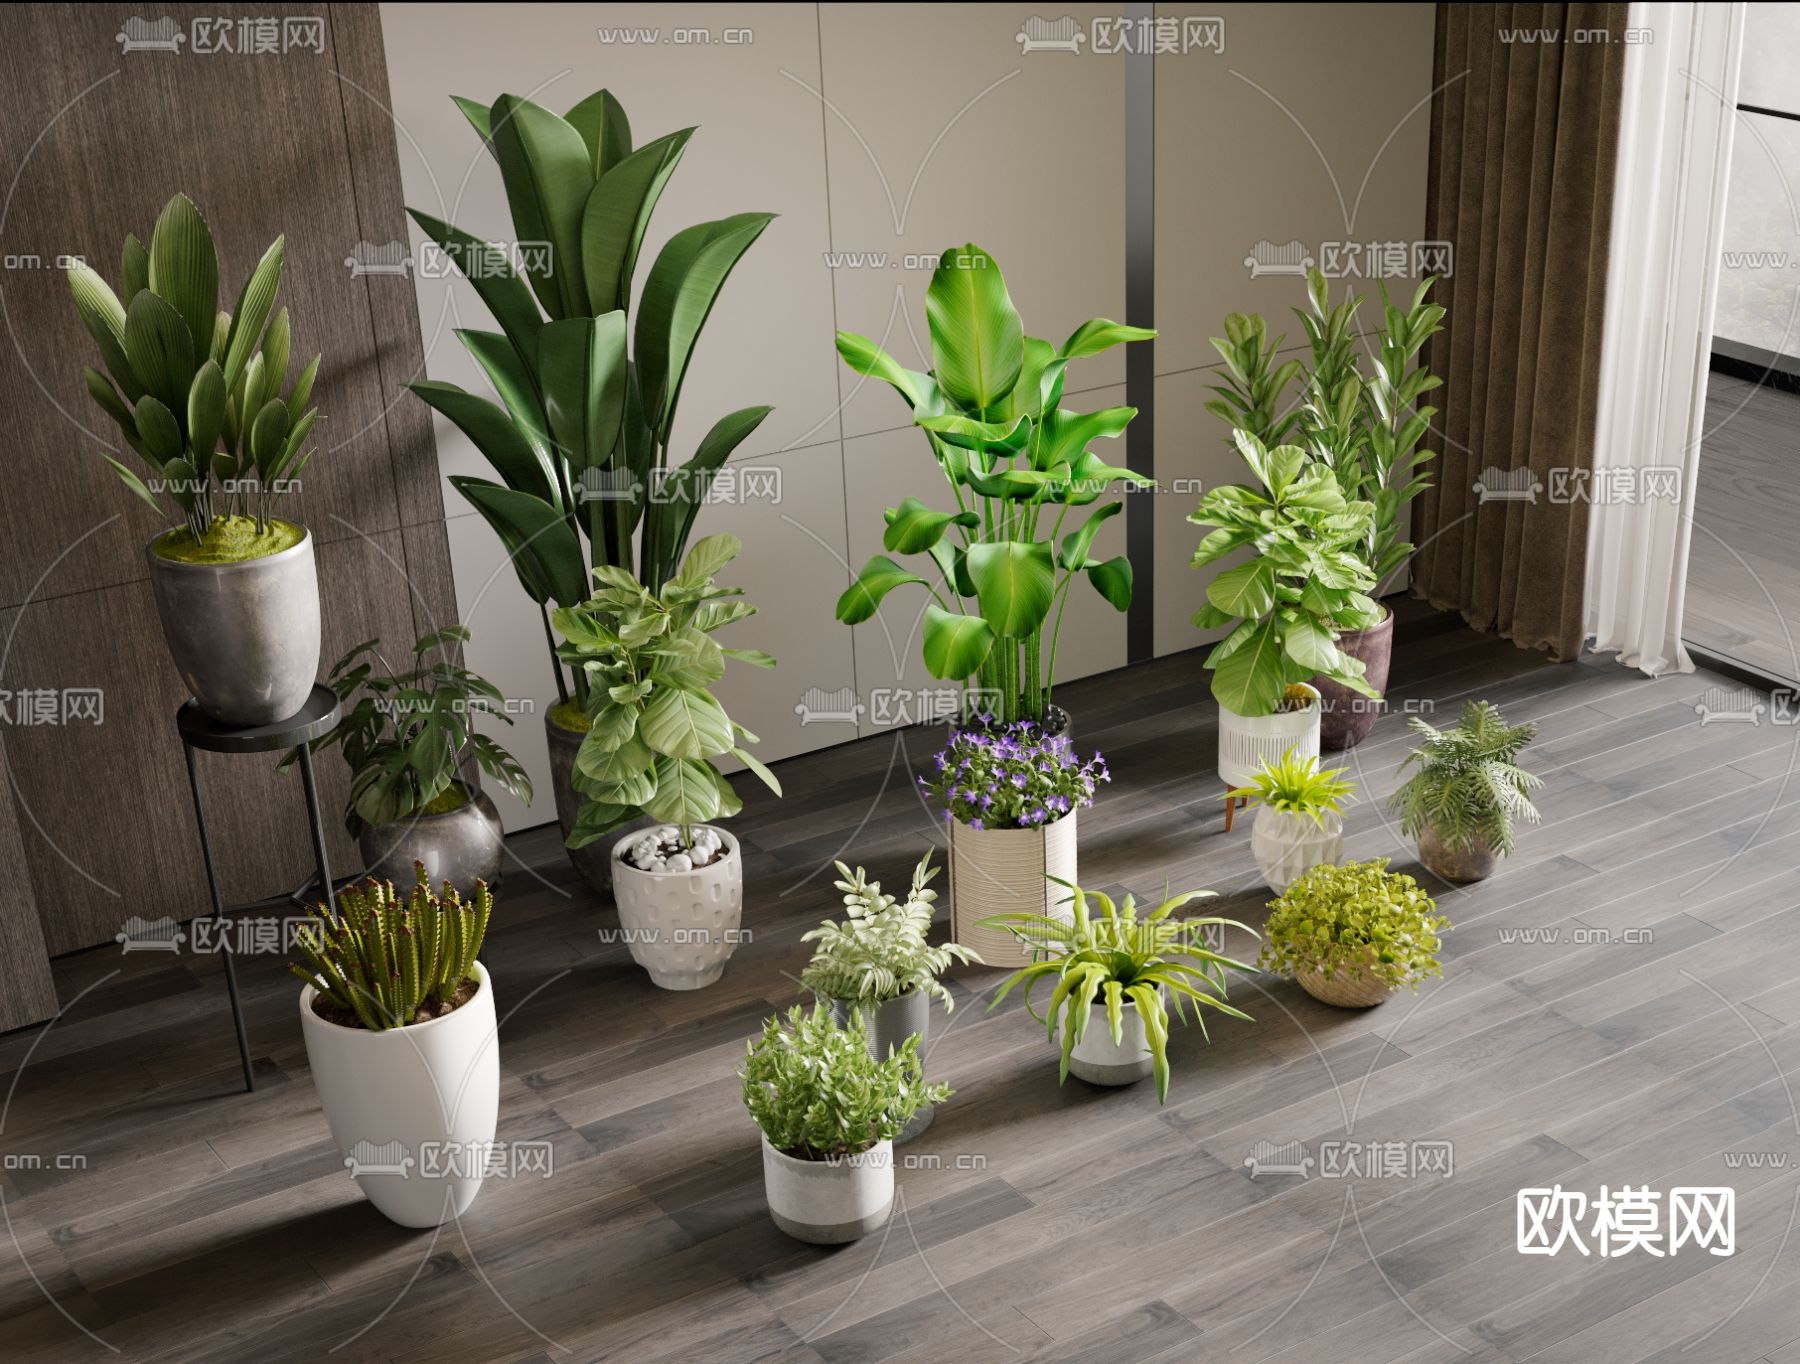 Plant – VRAY / CORONA – 3D MODEL – 483 - thumbnail 1